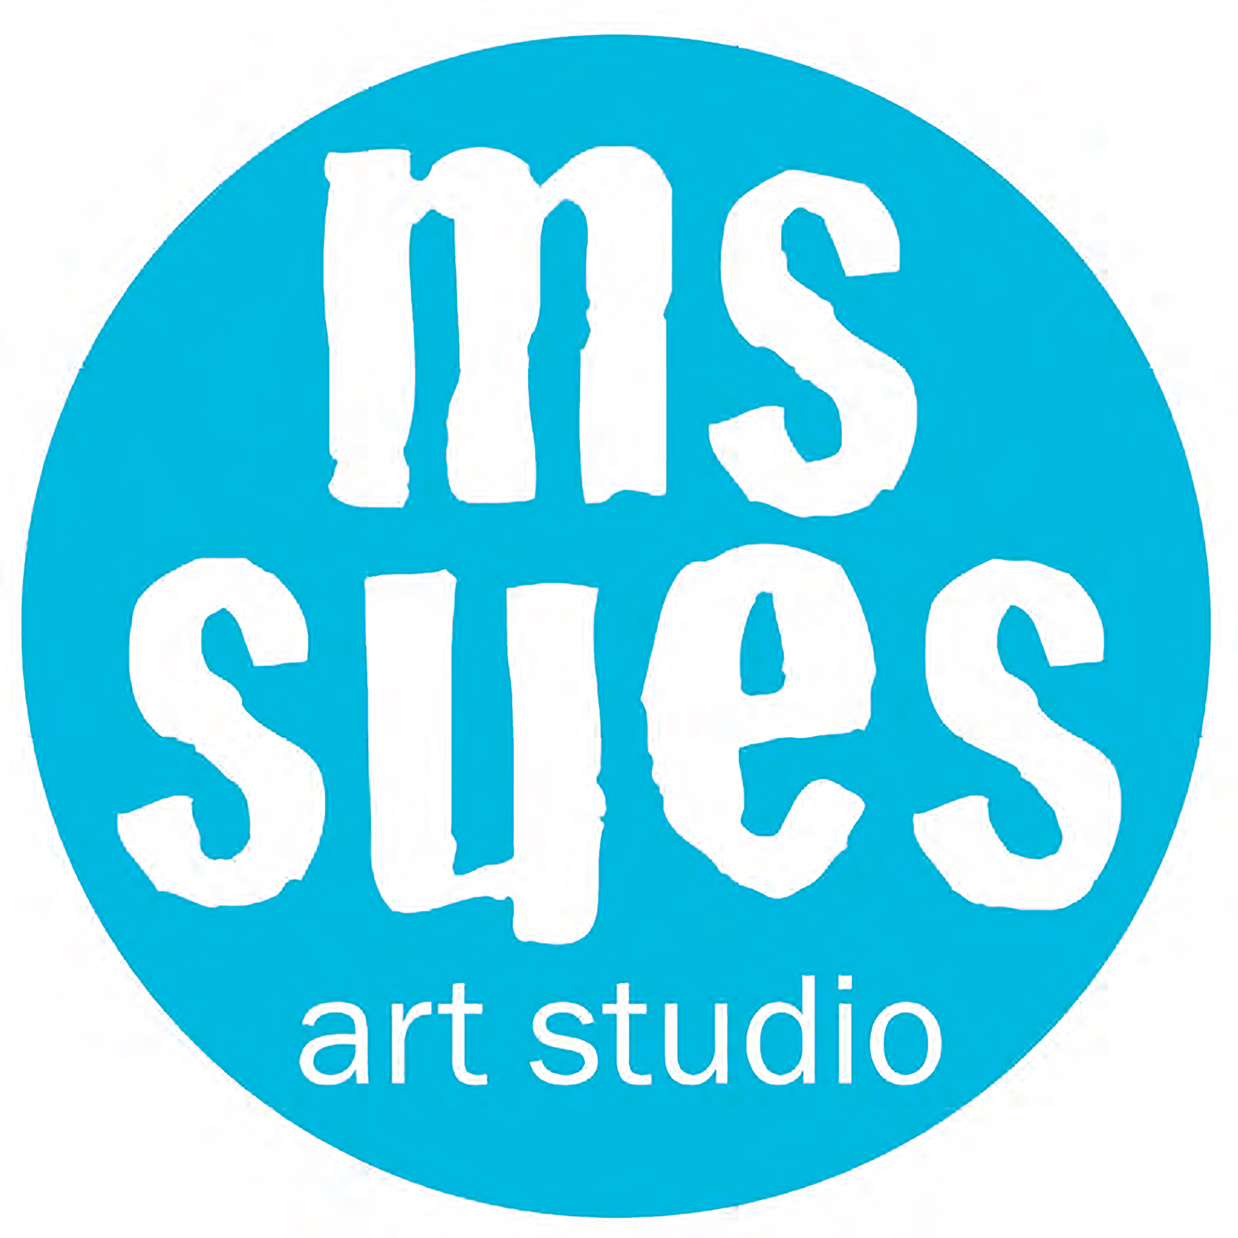 Ms. Sue's Art Studio